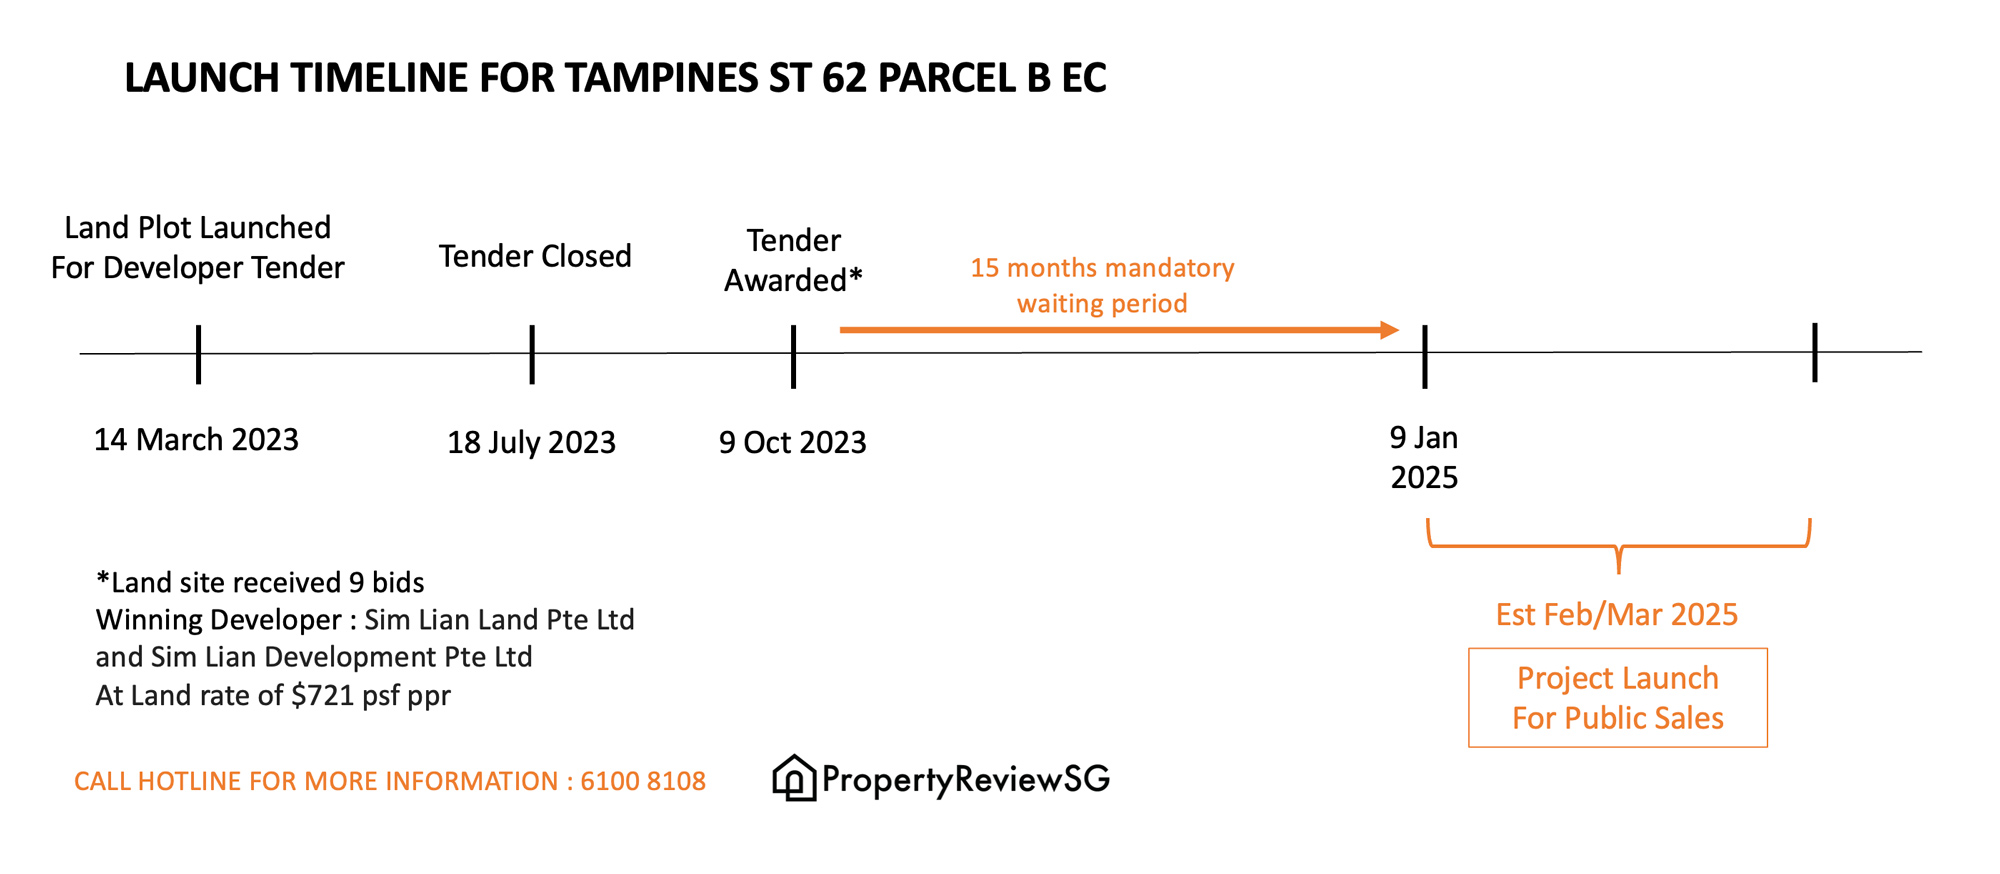 Launch Timeline for Tampines St 62 Parcel B EC